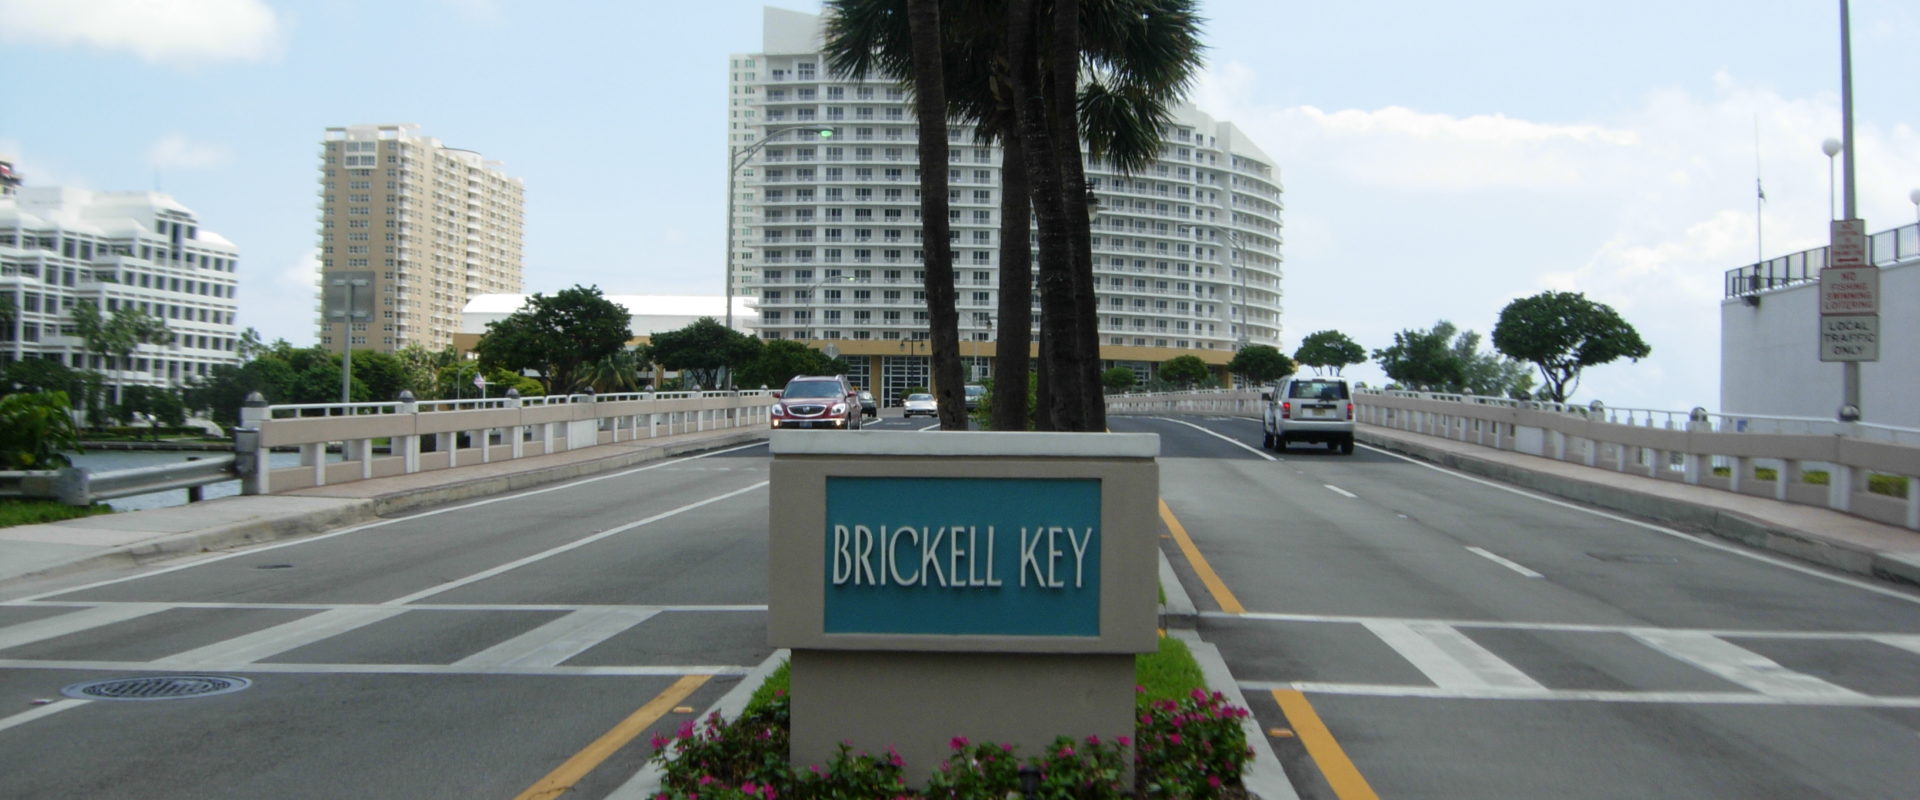 brickell key bridge